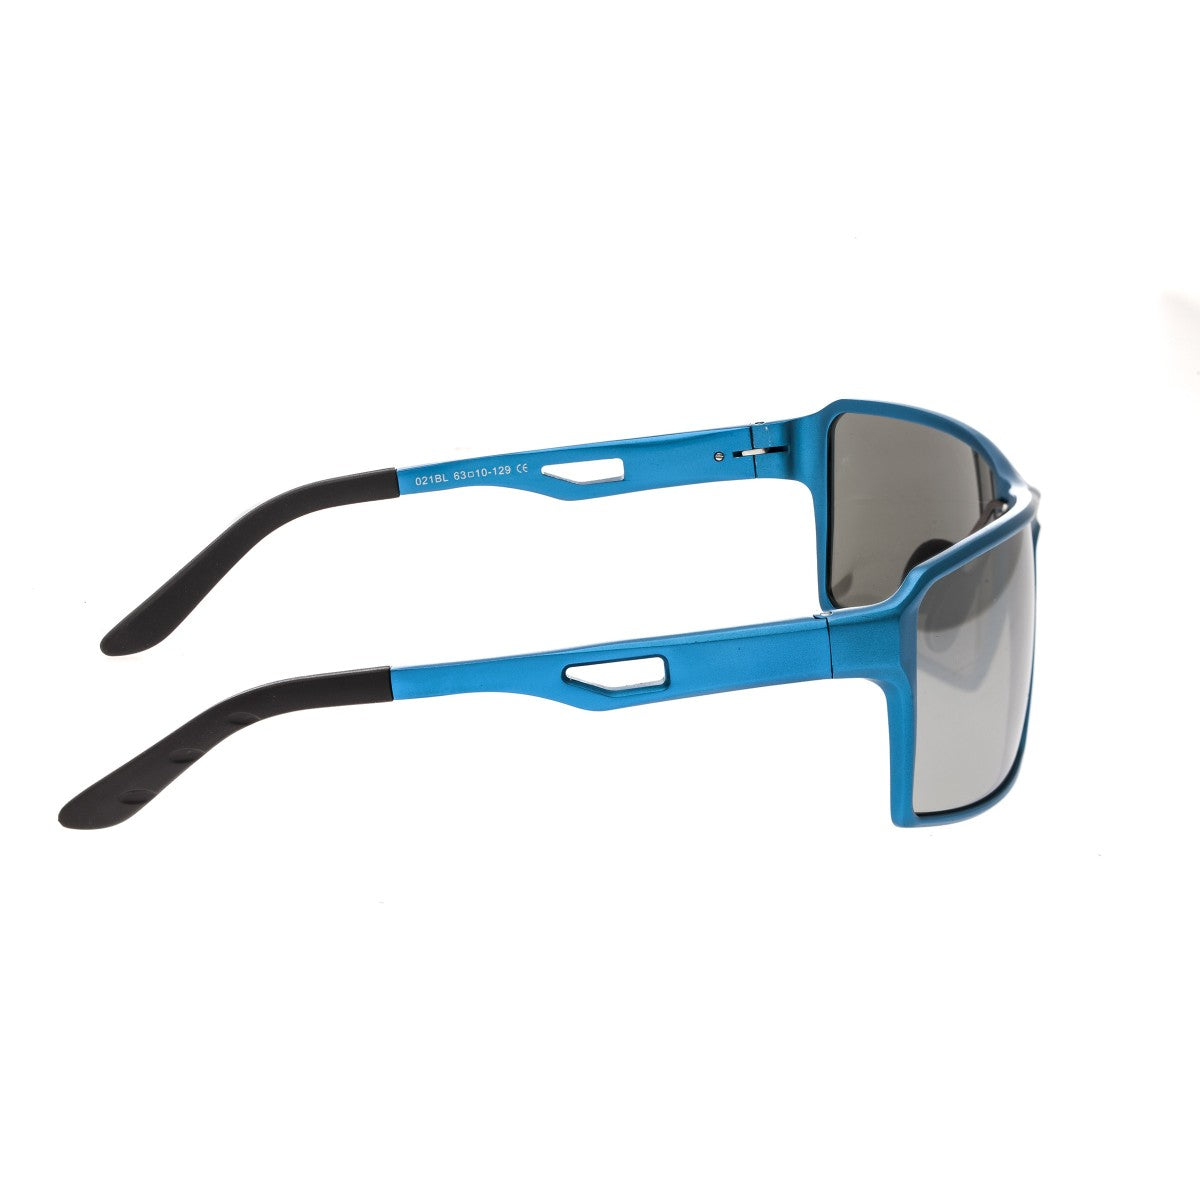 Breed Centaurus Aluminium Polarized Sunglasses - Blue/Silver - BSG021BL